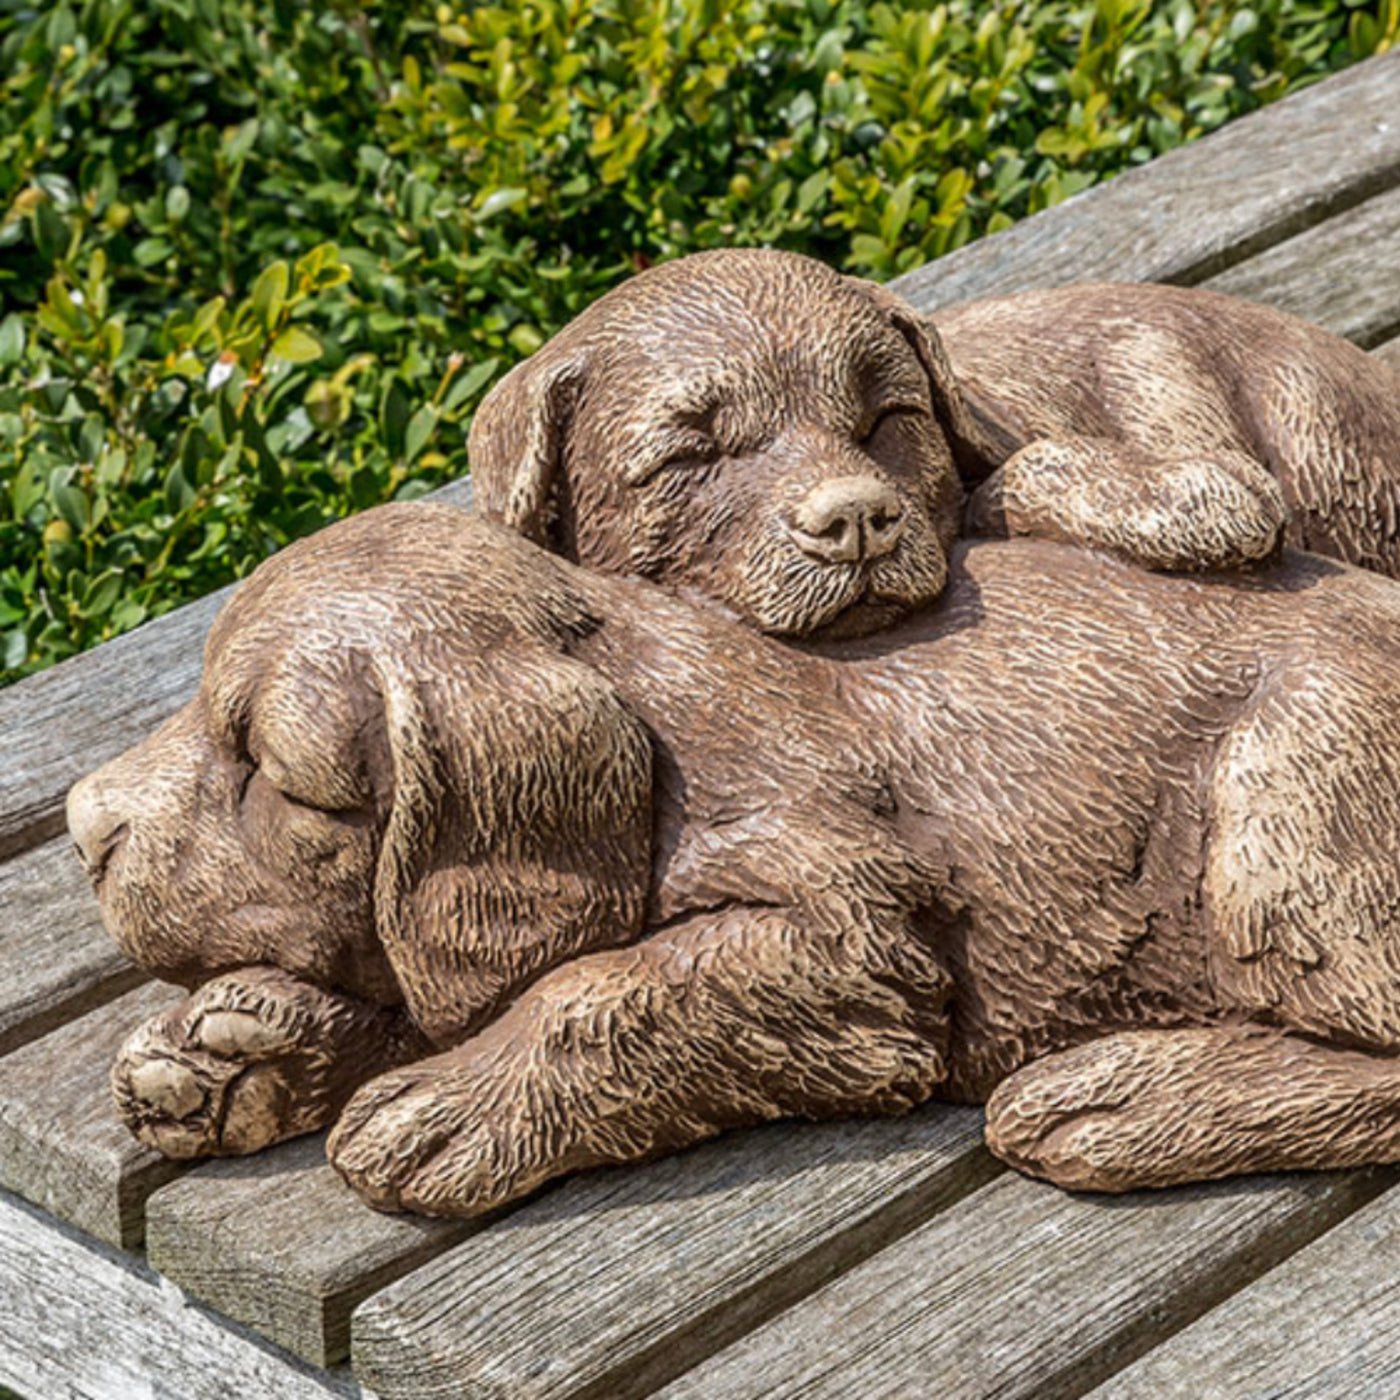 Dog Nap Time Puppies